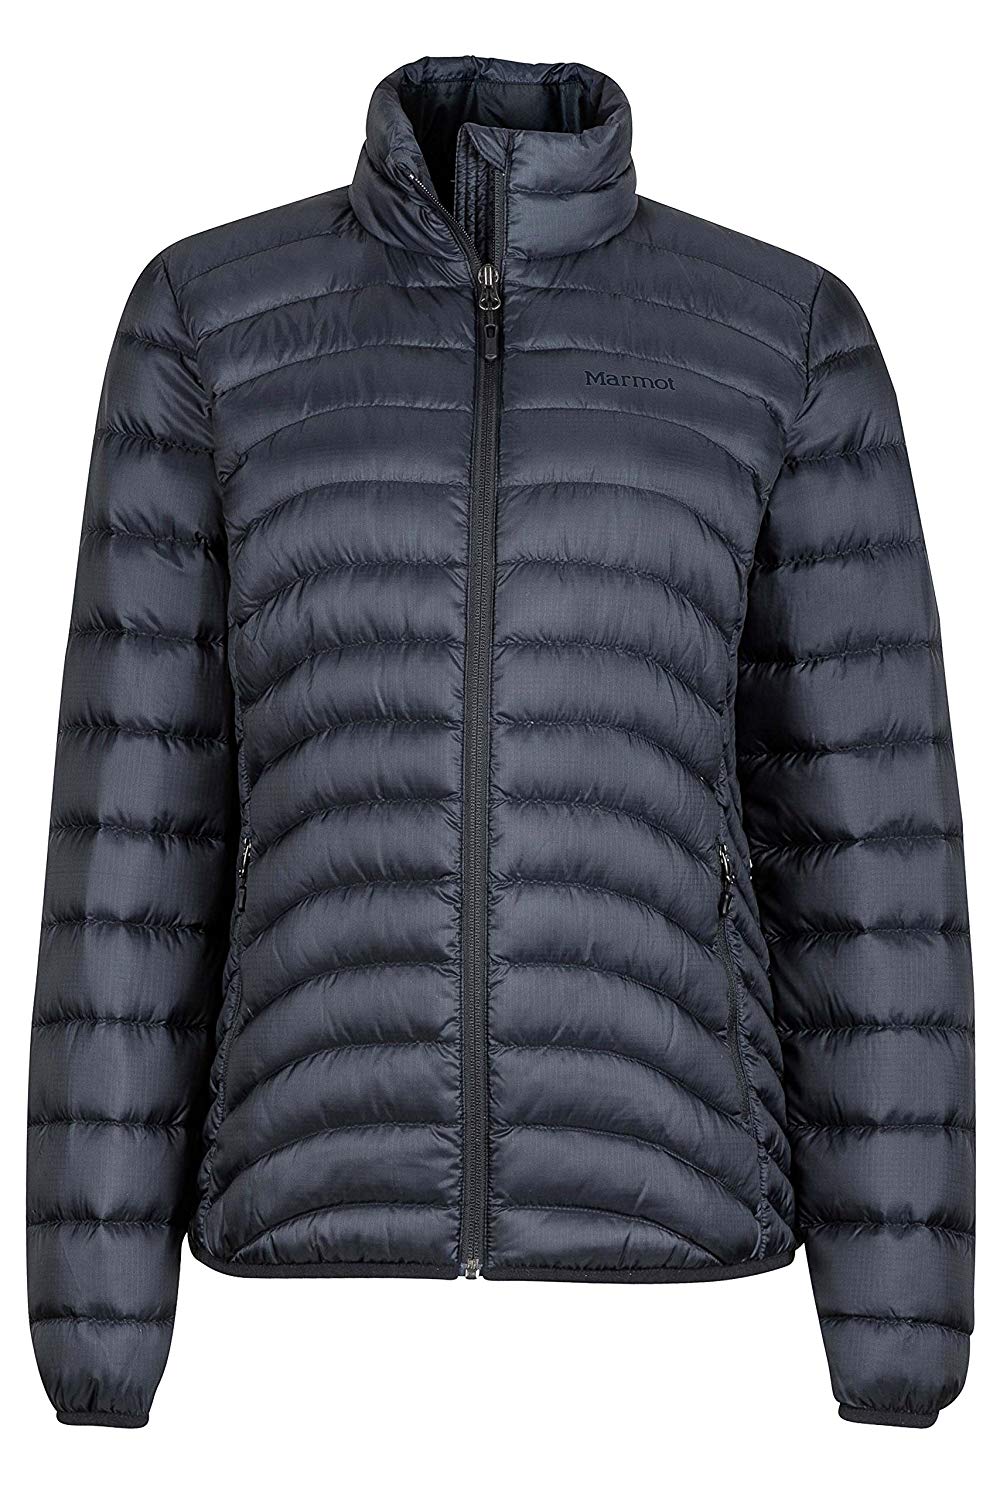 best down jackets for women - Marmot Aruna